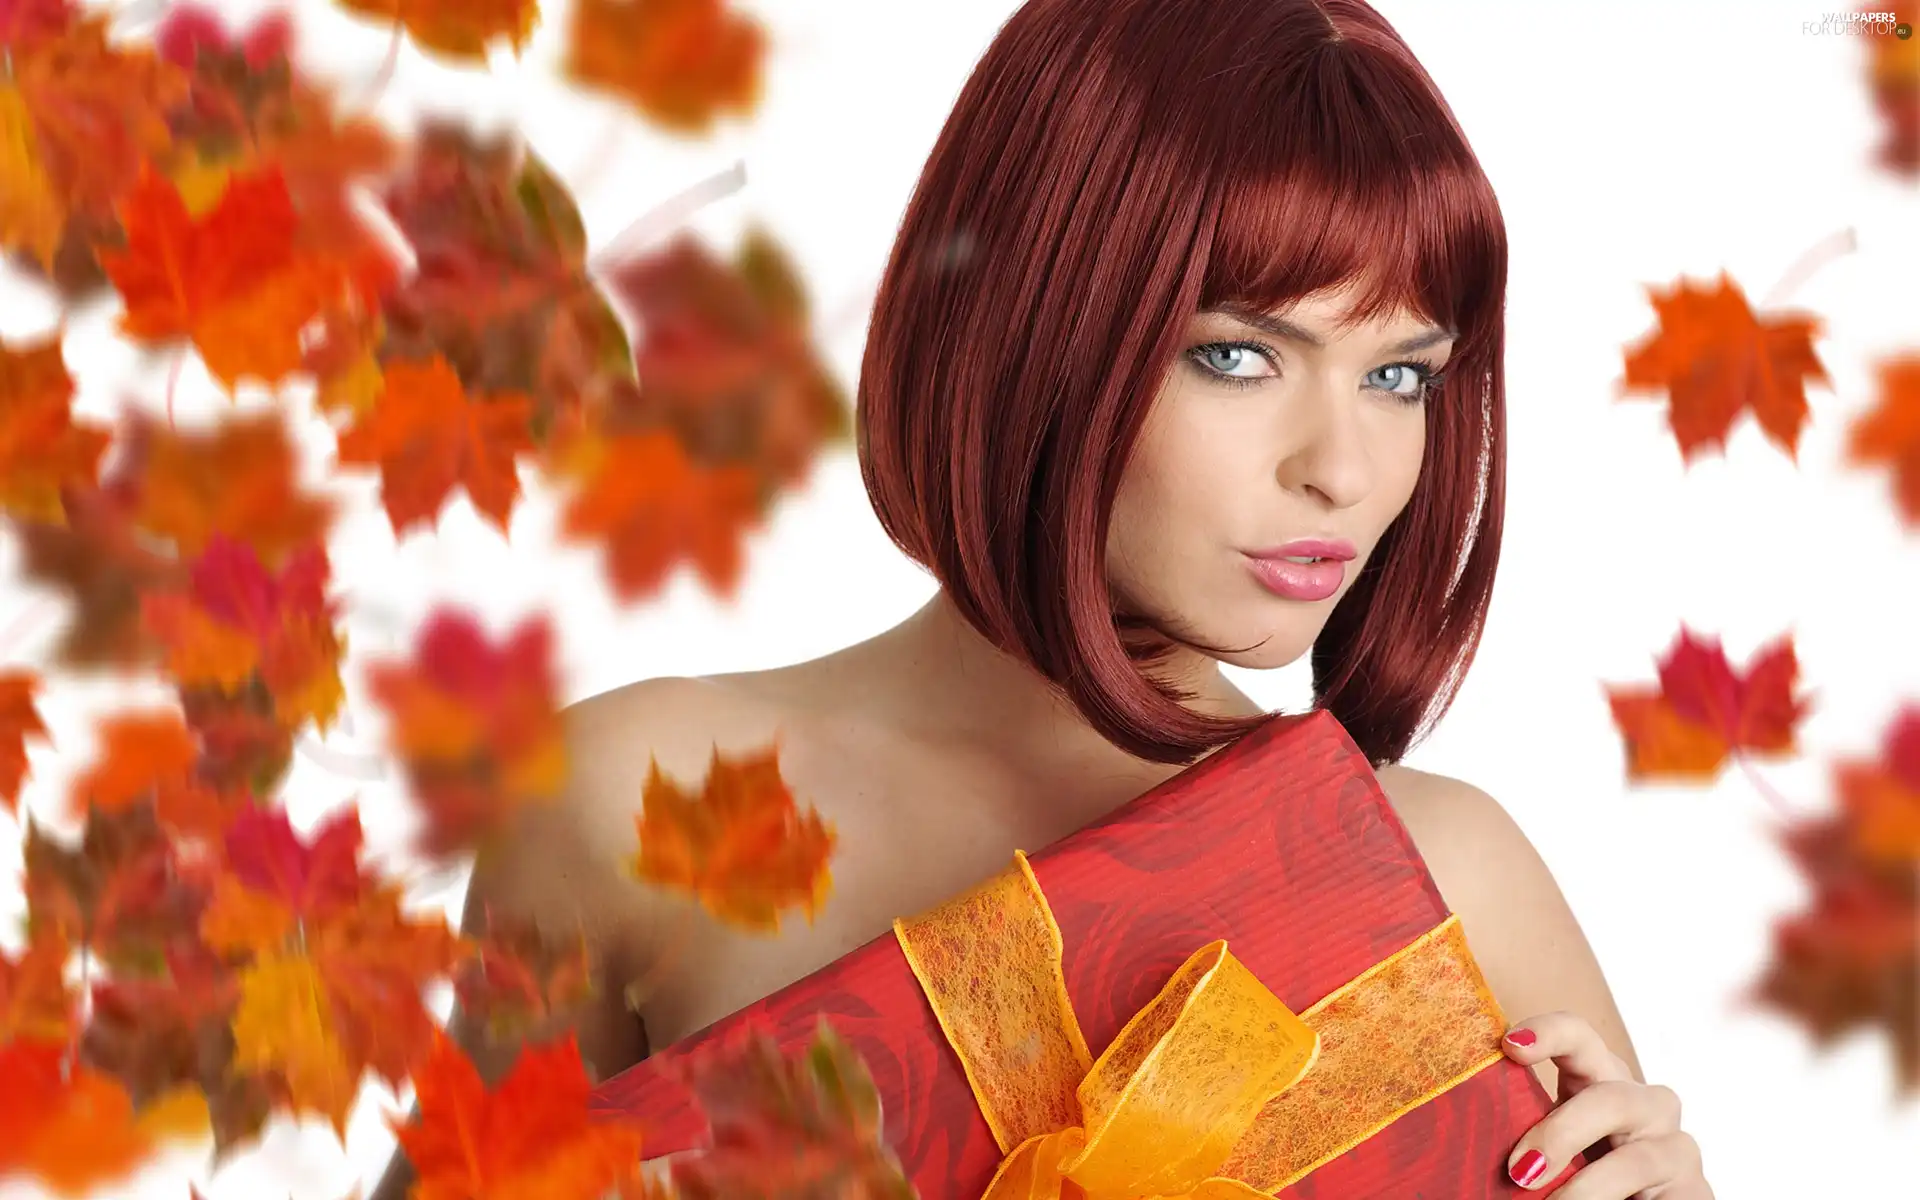 Women, Beauty, Leaf, Present, Autumn, redhead